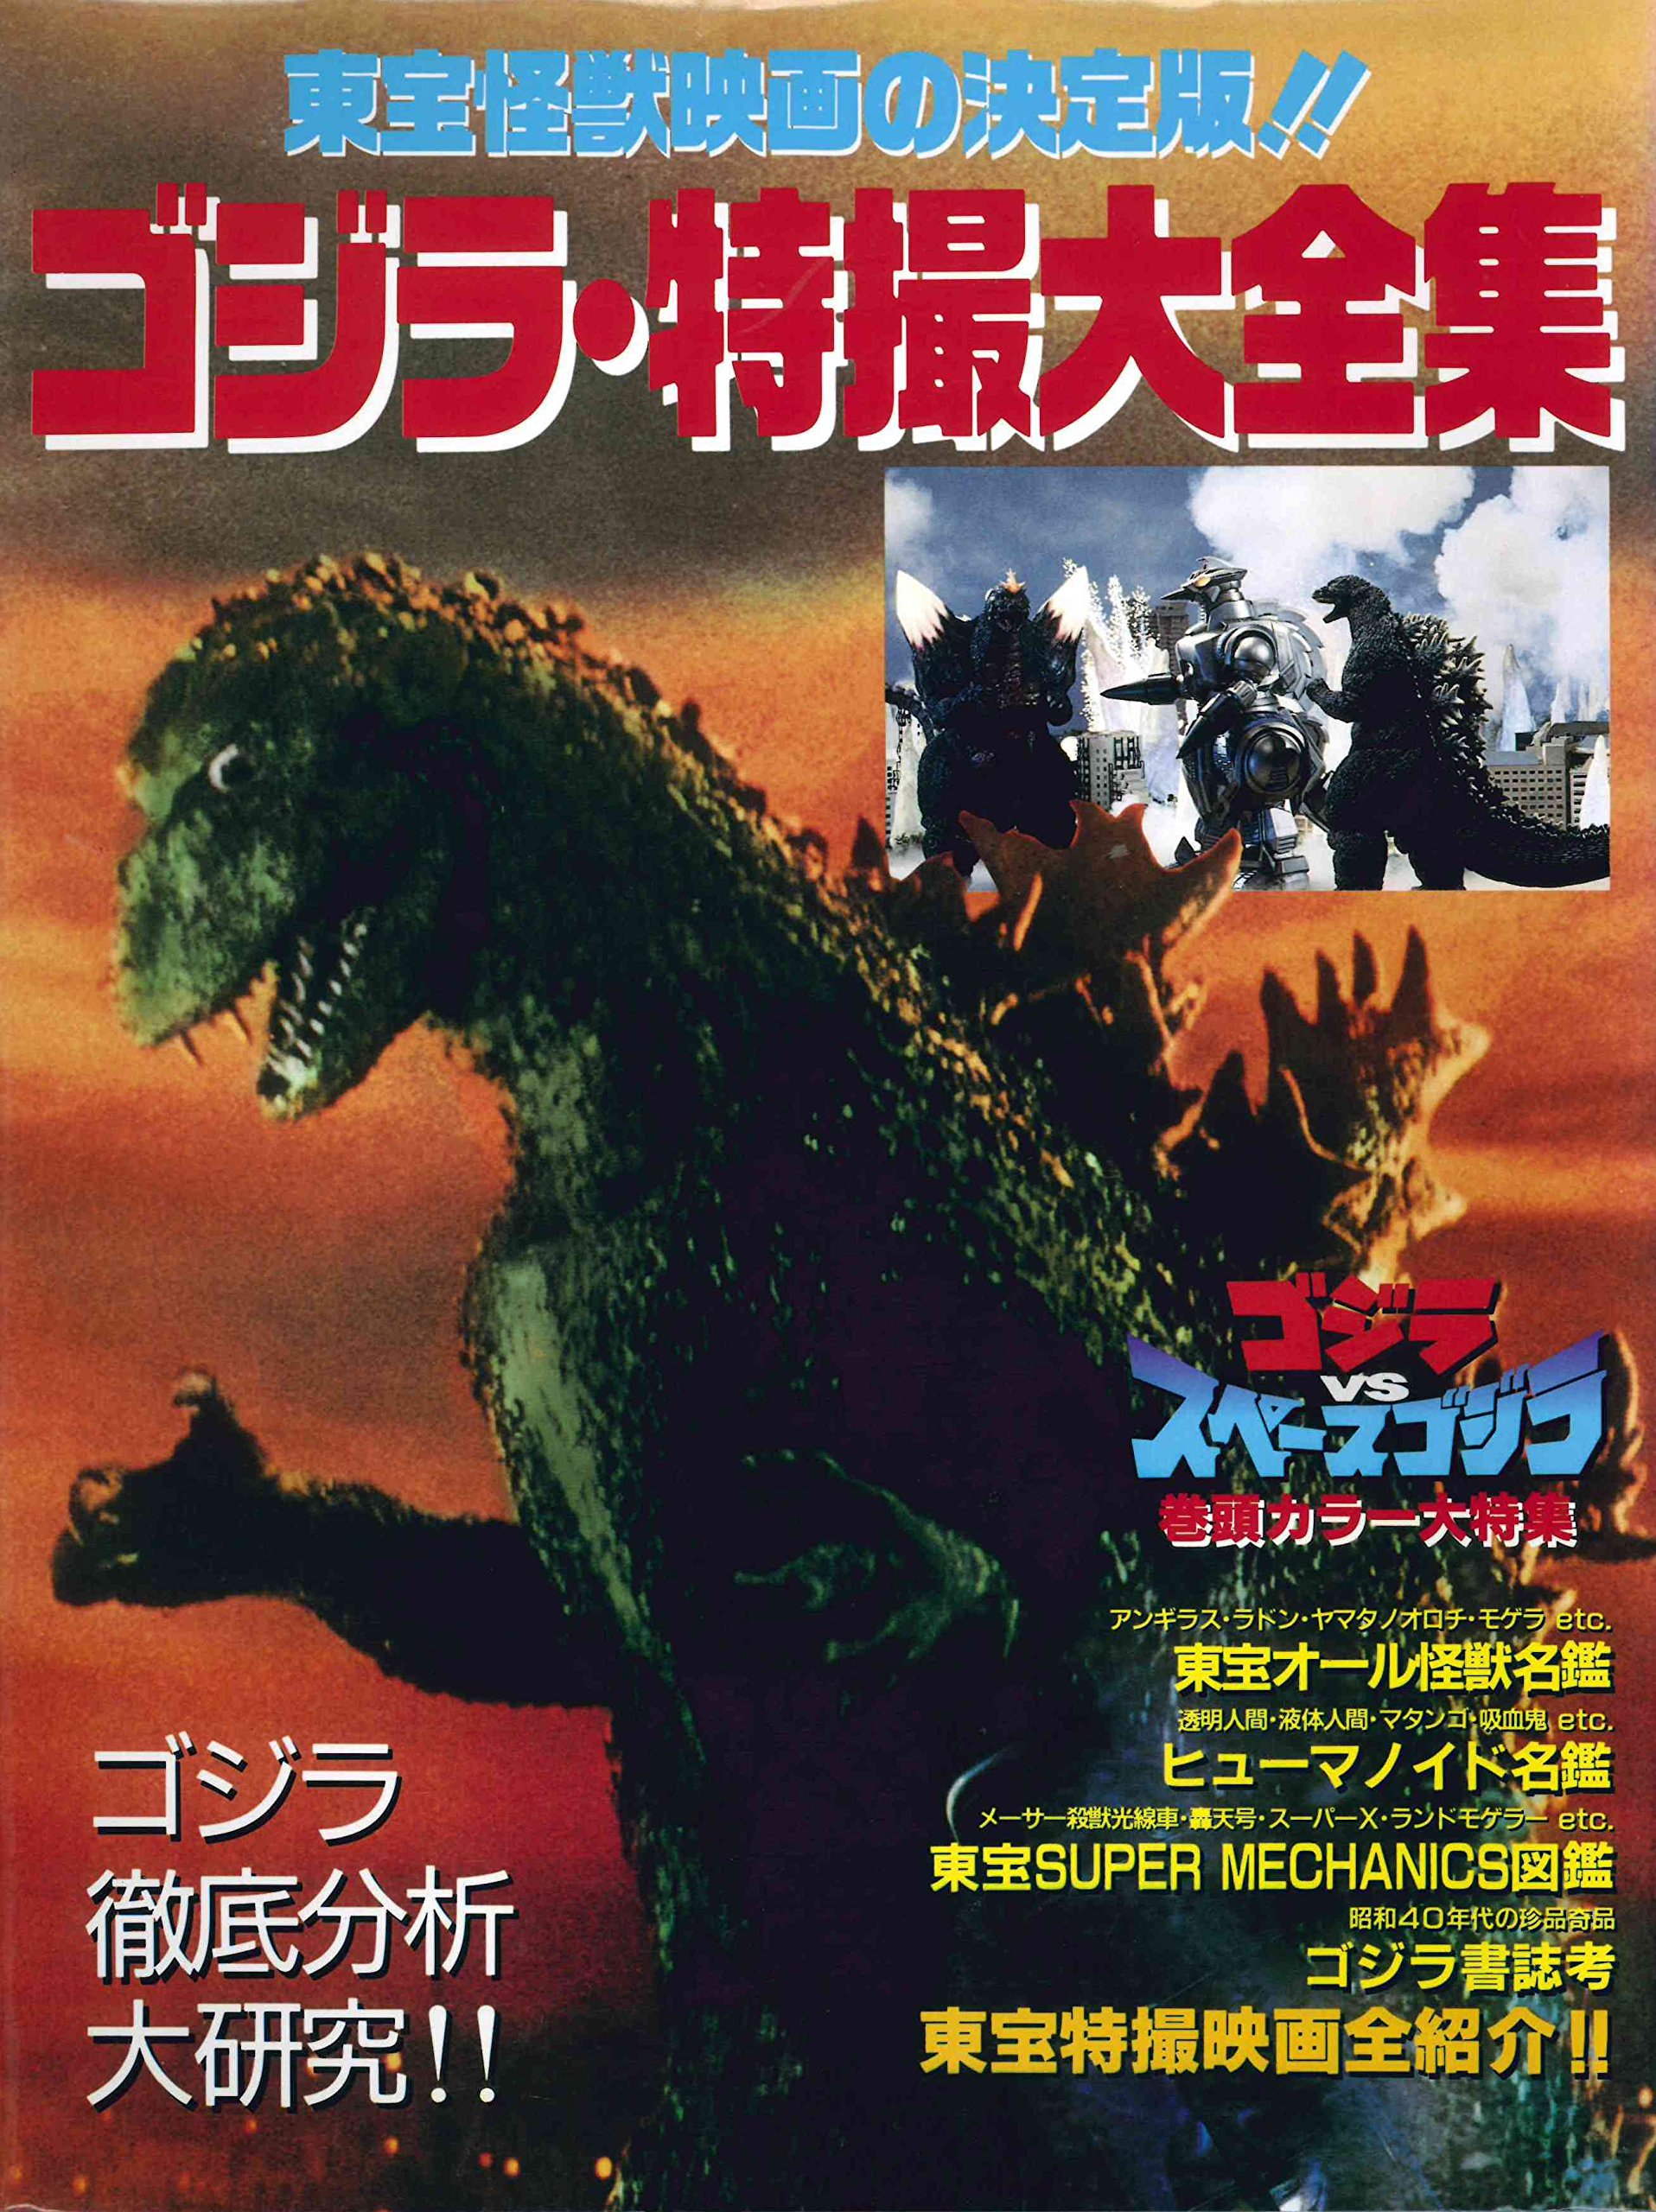 Definitive Edition of Toho Monster Movies!! Godzilla Special 